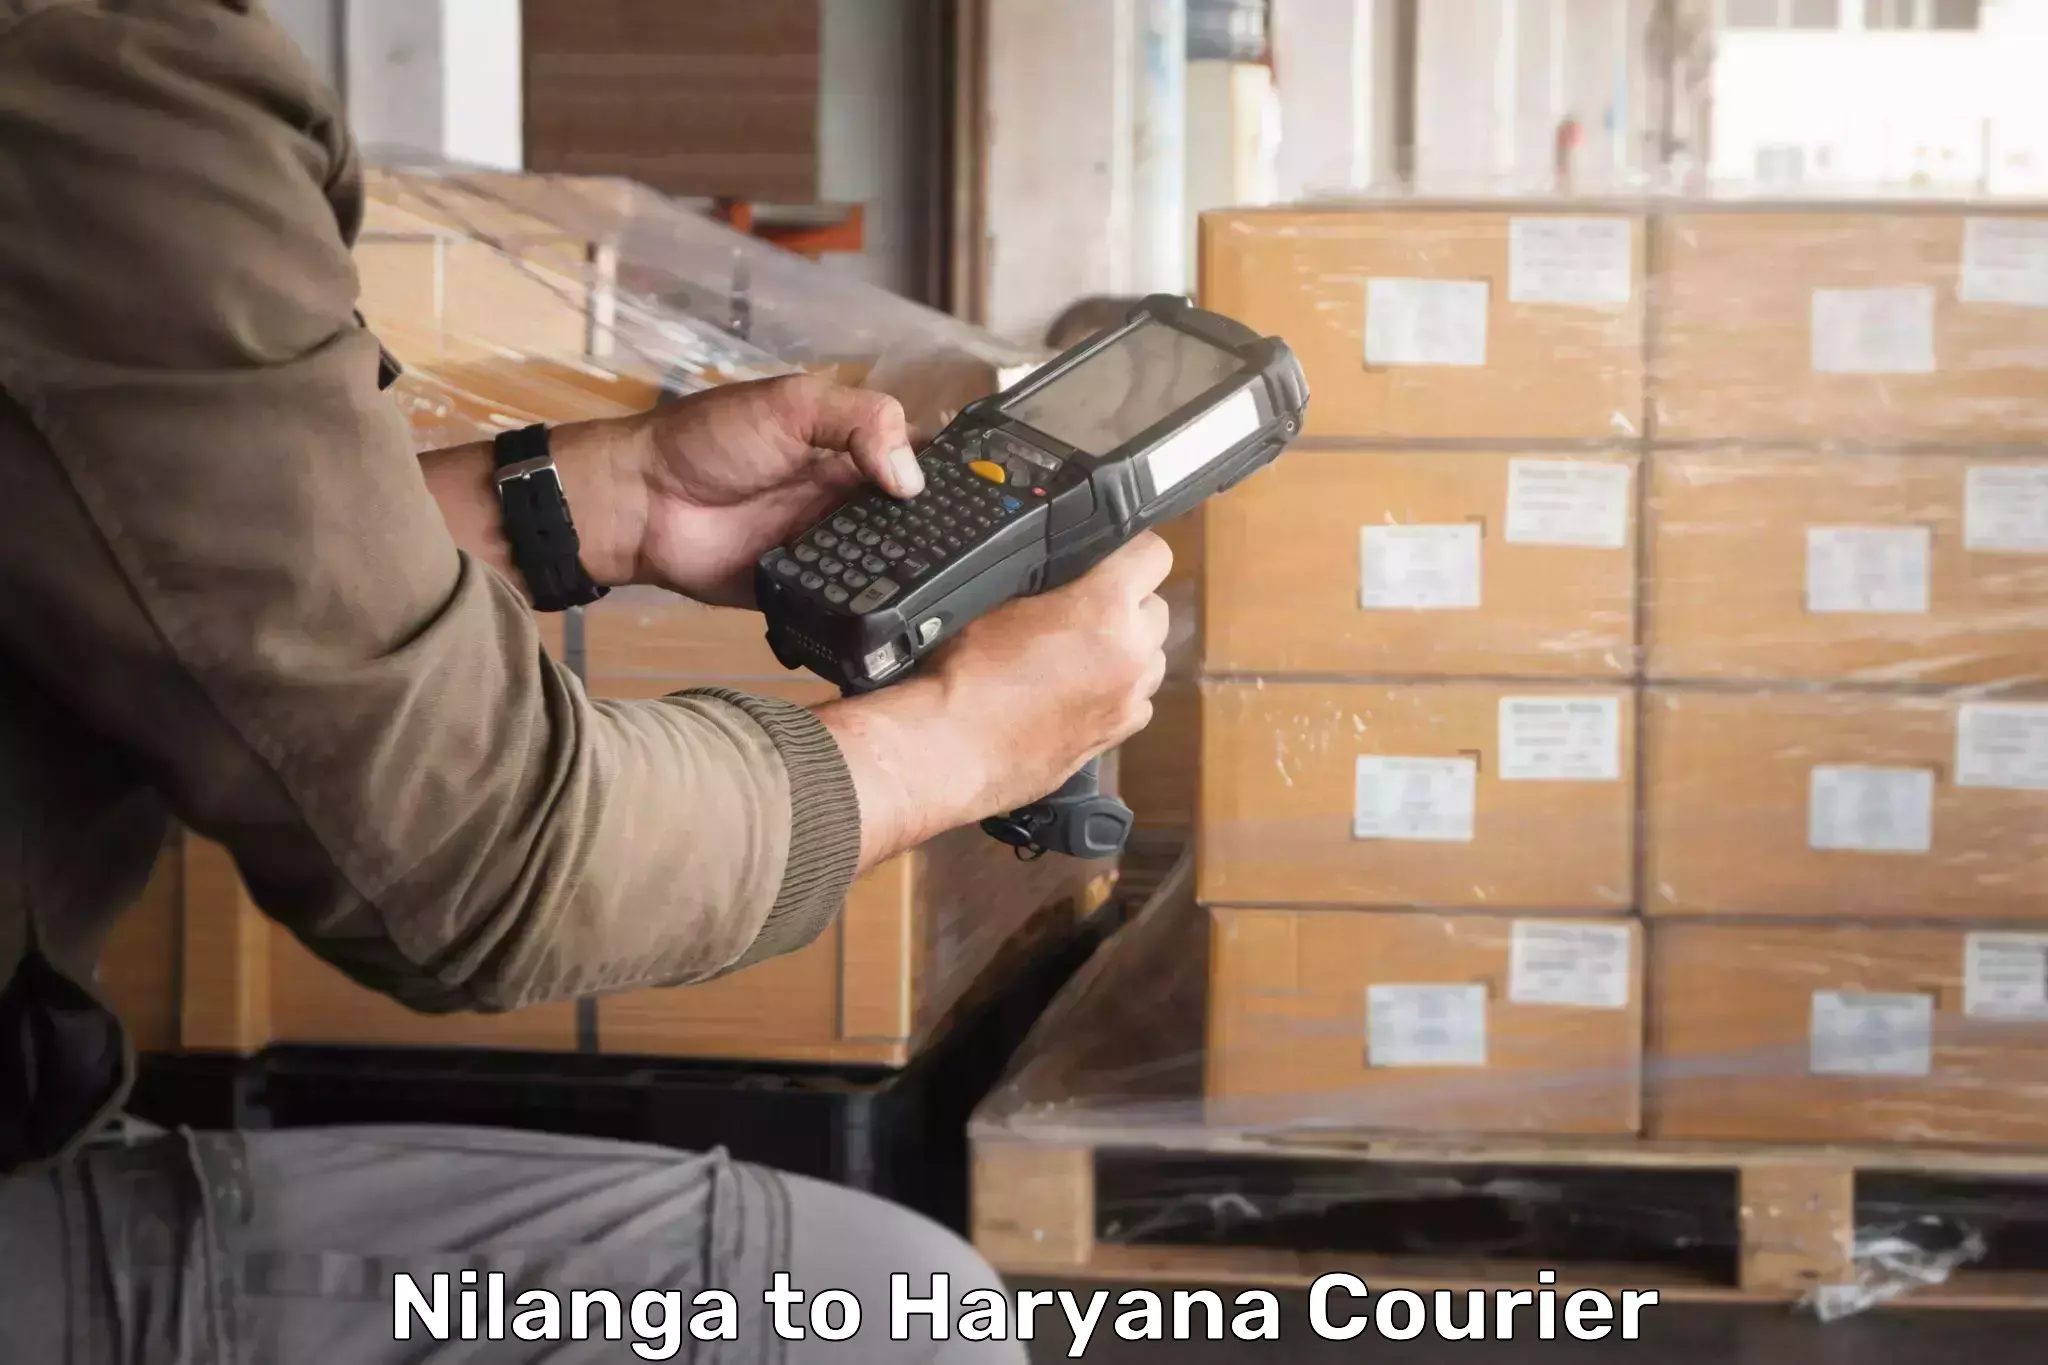 State-of-the-art courier technology Nilanga to Gohana